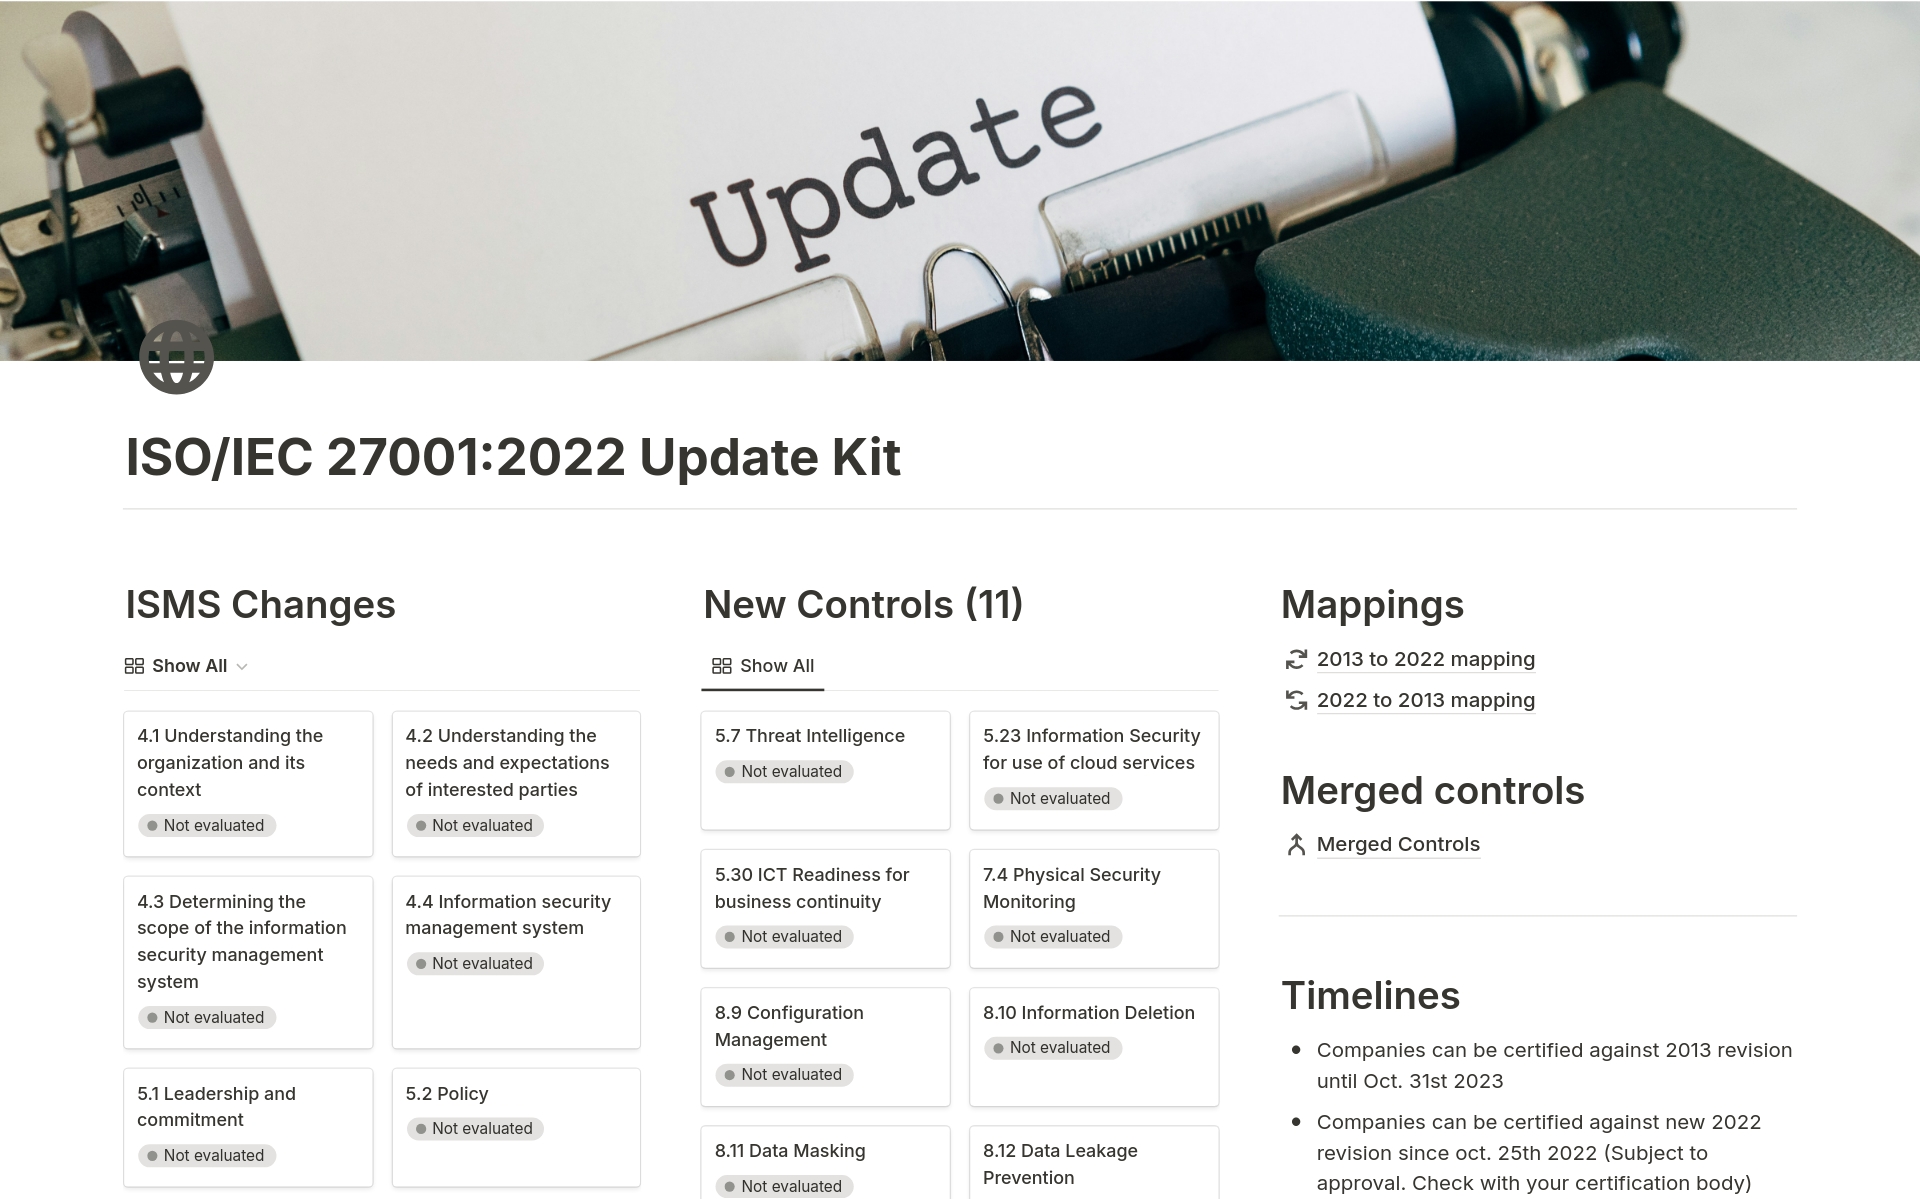 Aperçu du modèle de ISO/IEC 27001:2022 Update Kit